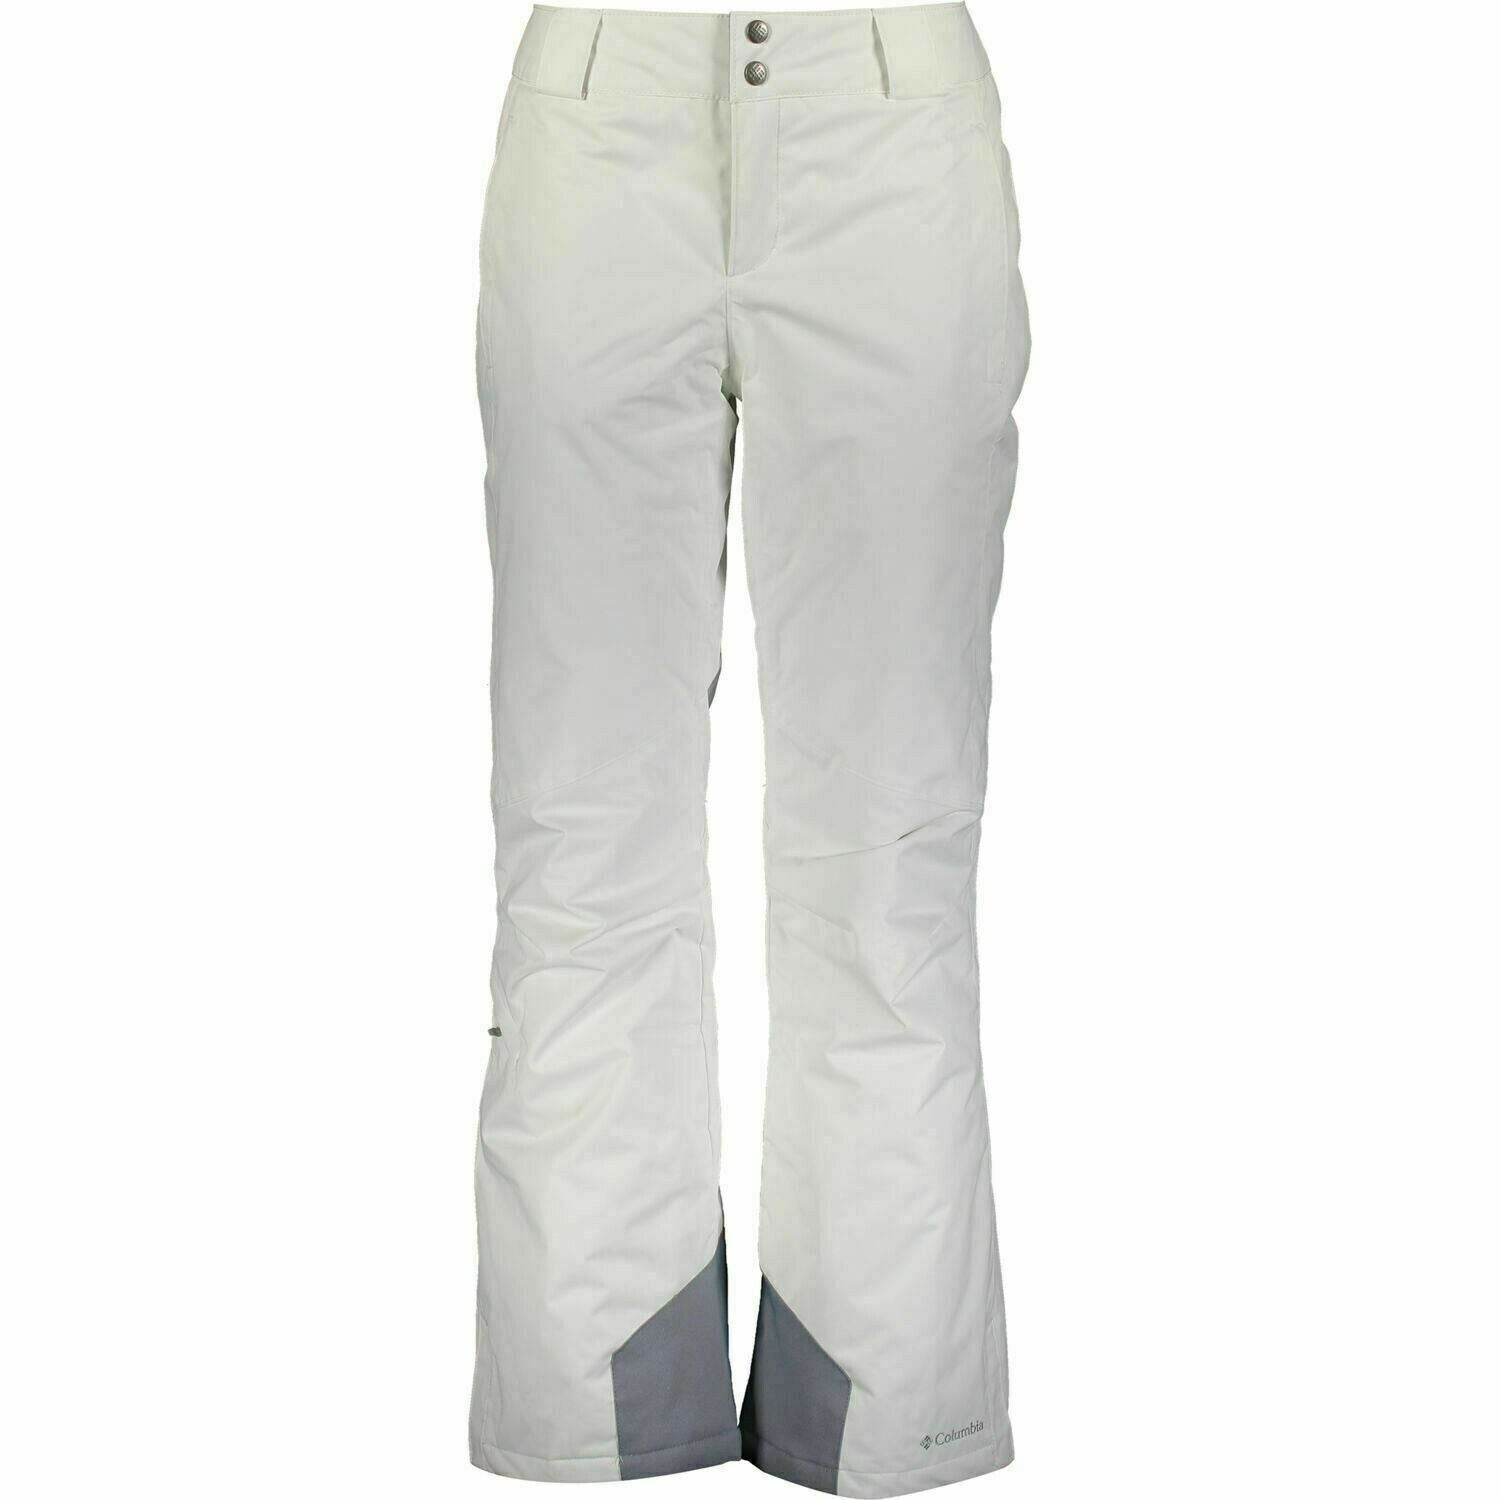 COLUMBIA Women's BUGABOO OH Ski Trousers Pants, White, size XL